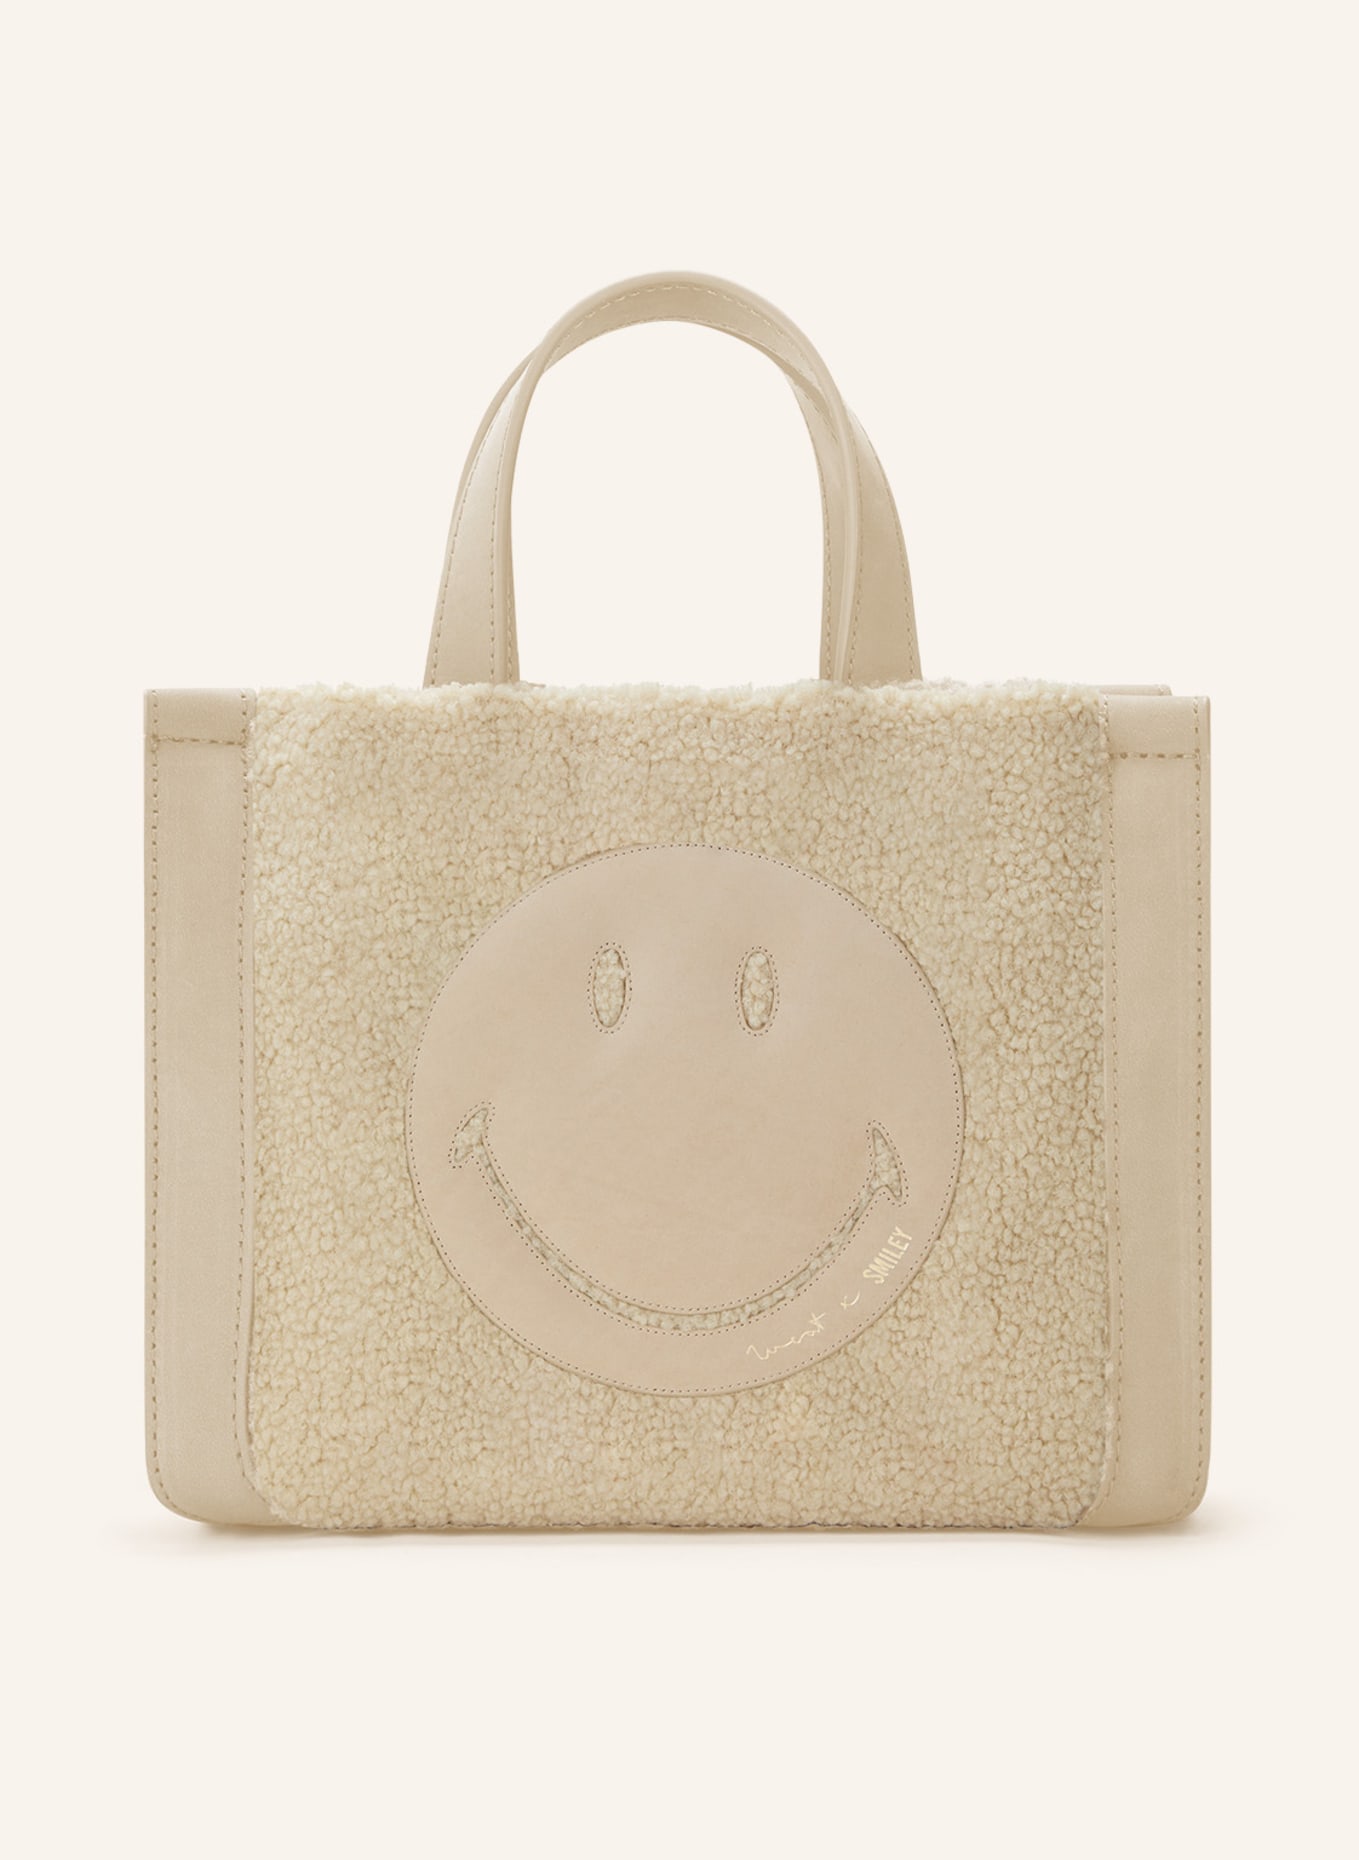 WEAT Handtasche MINI TOTE SMILEY, Farbe: BEIGE (Bild 1)